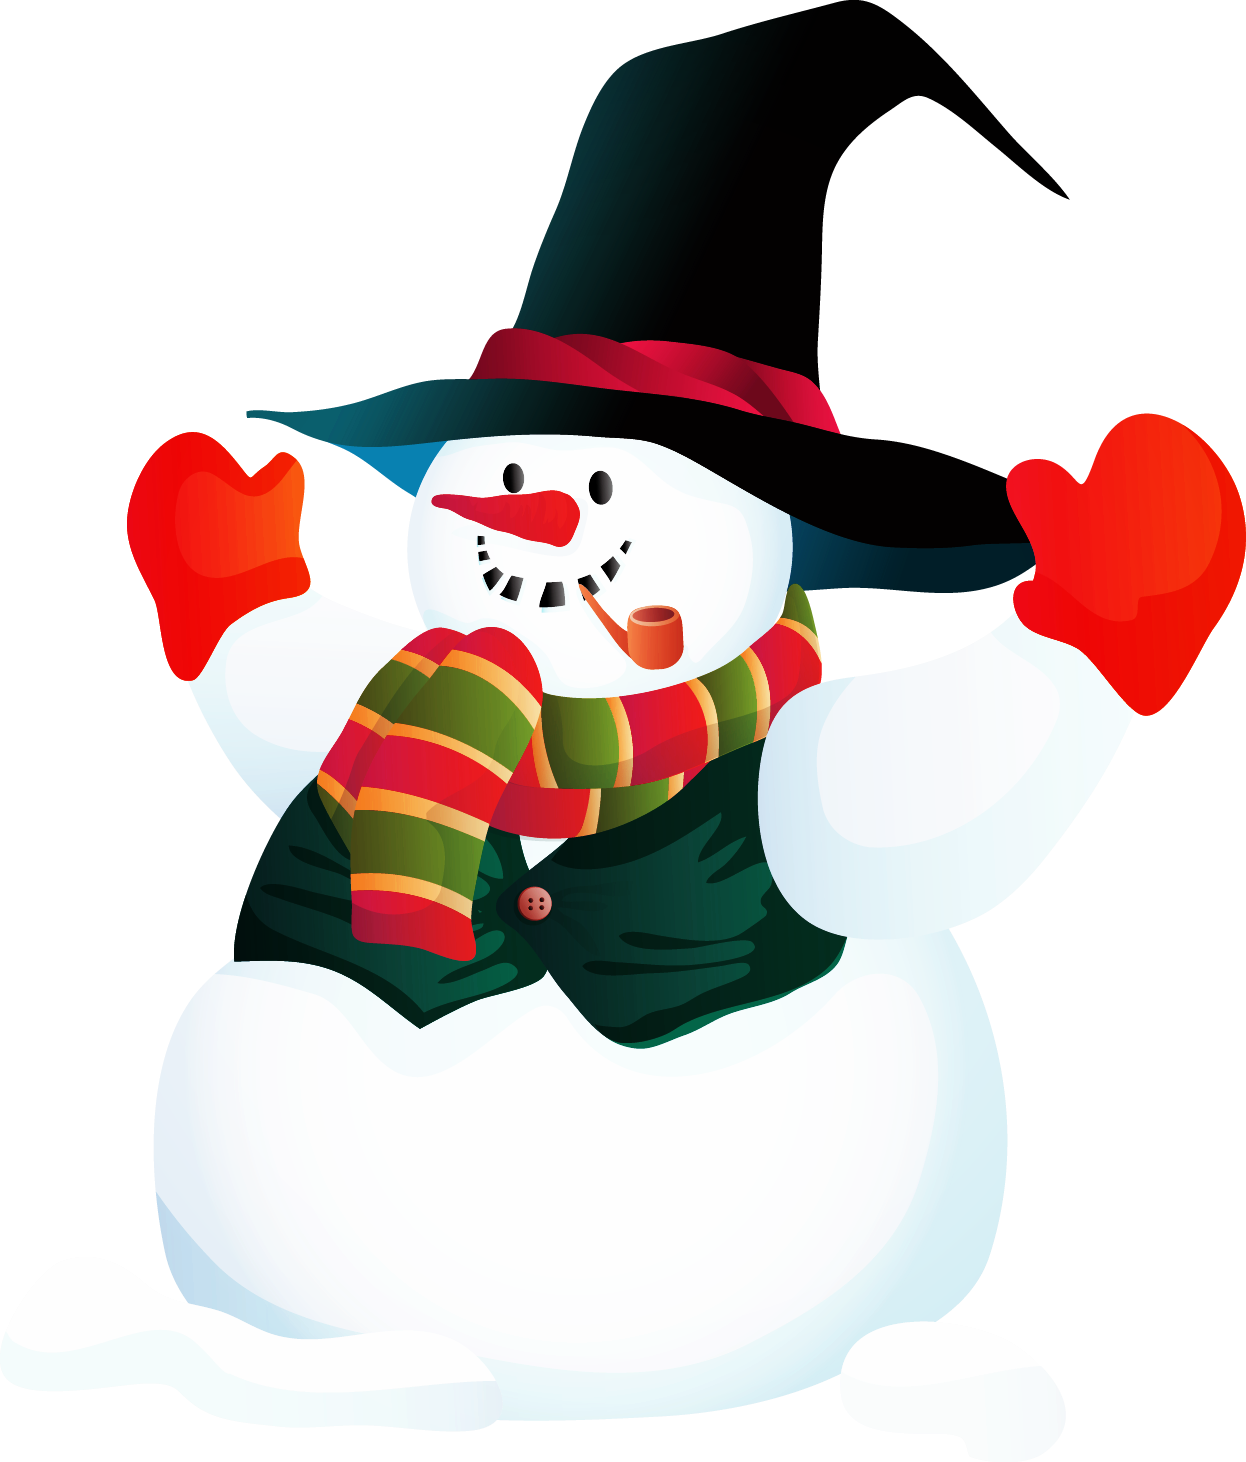 Snowman Animation Clip Art - Snowman Animation Clip Art (1246x1462)